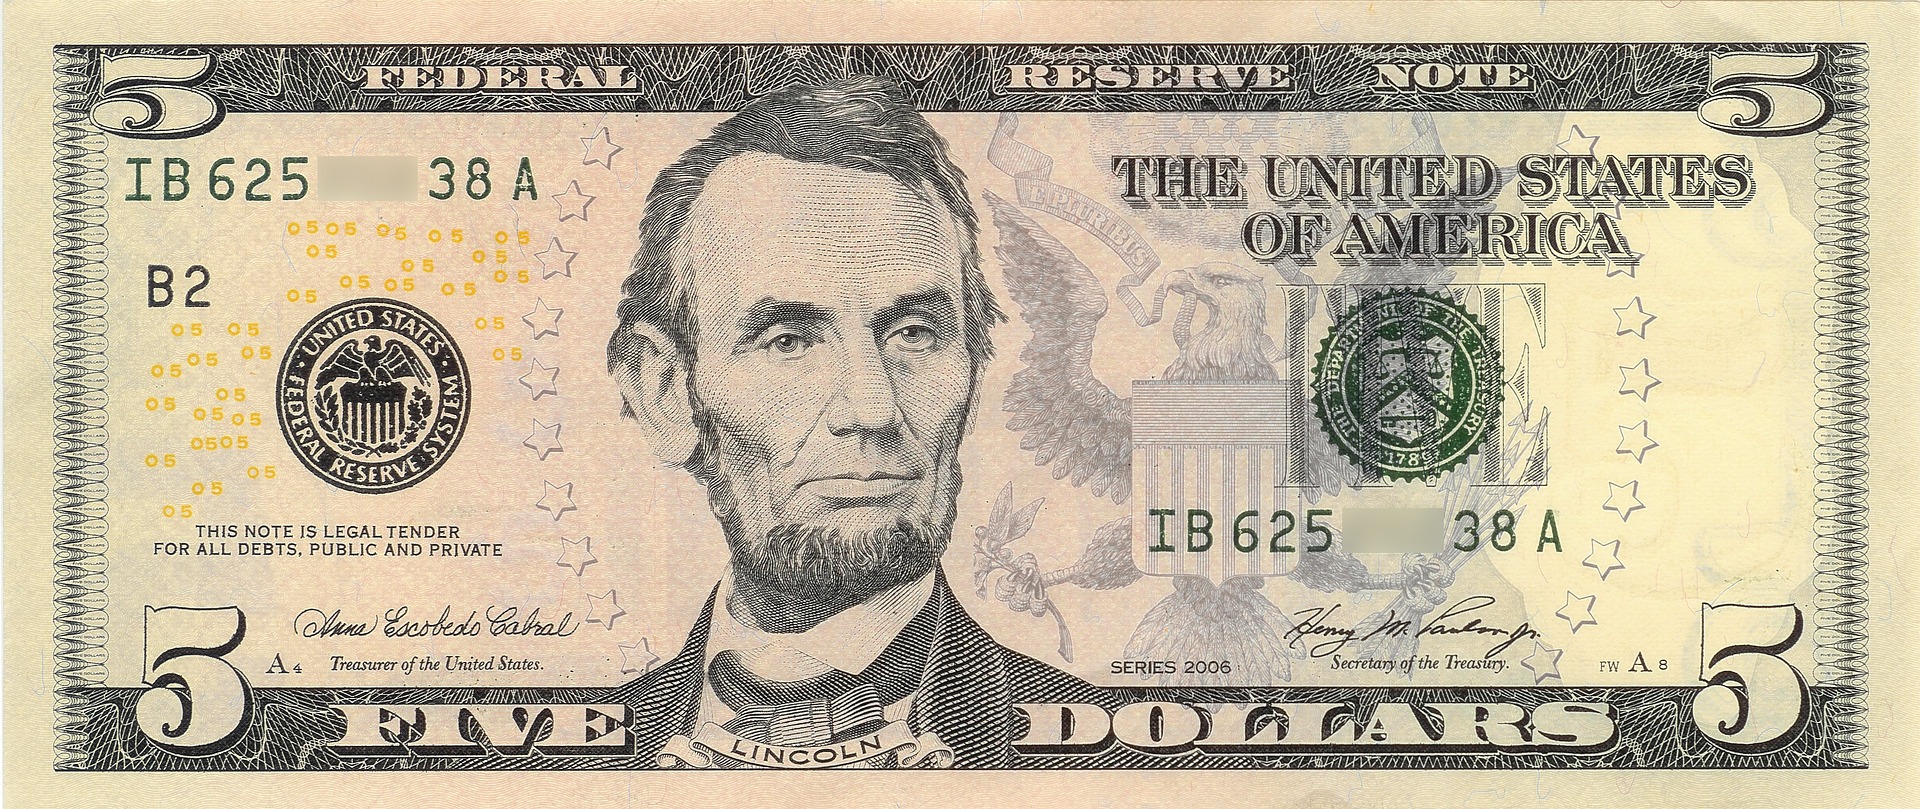 Abraham Lincoln.jpg